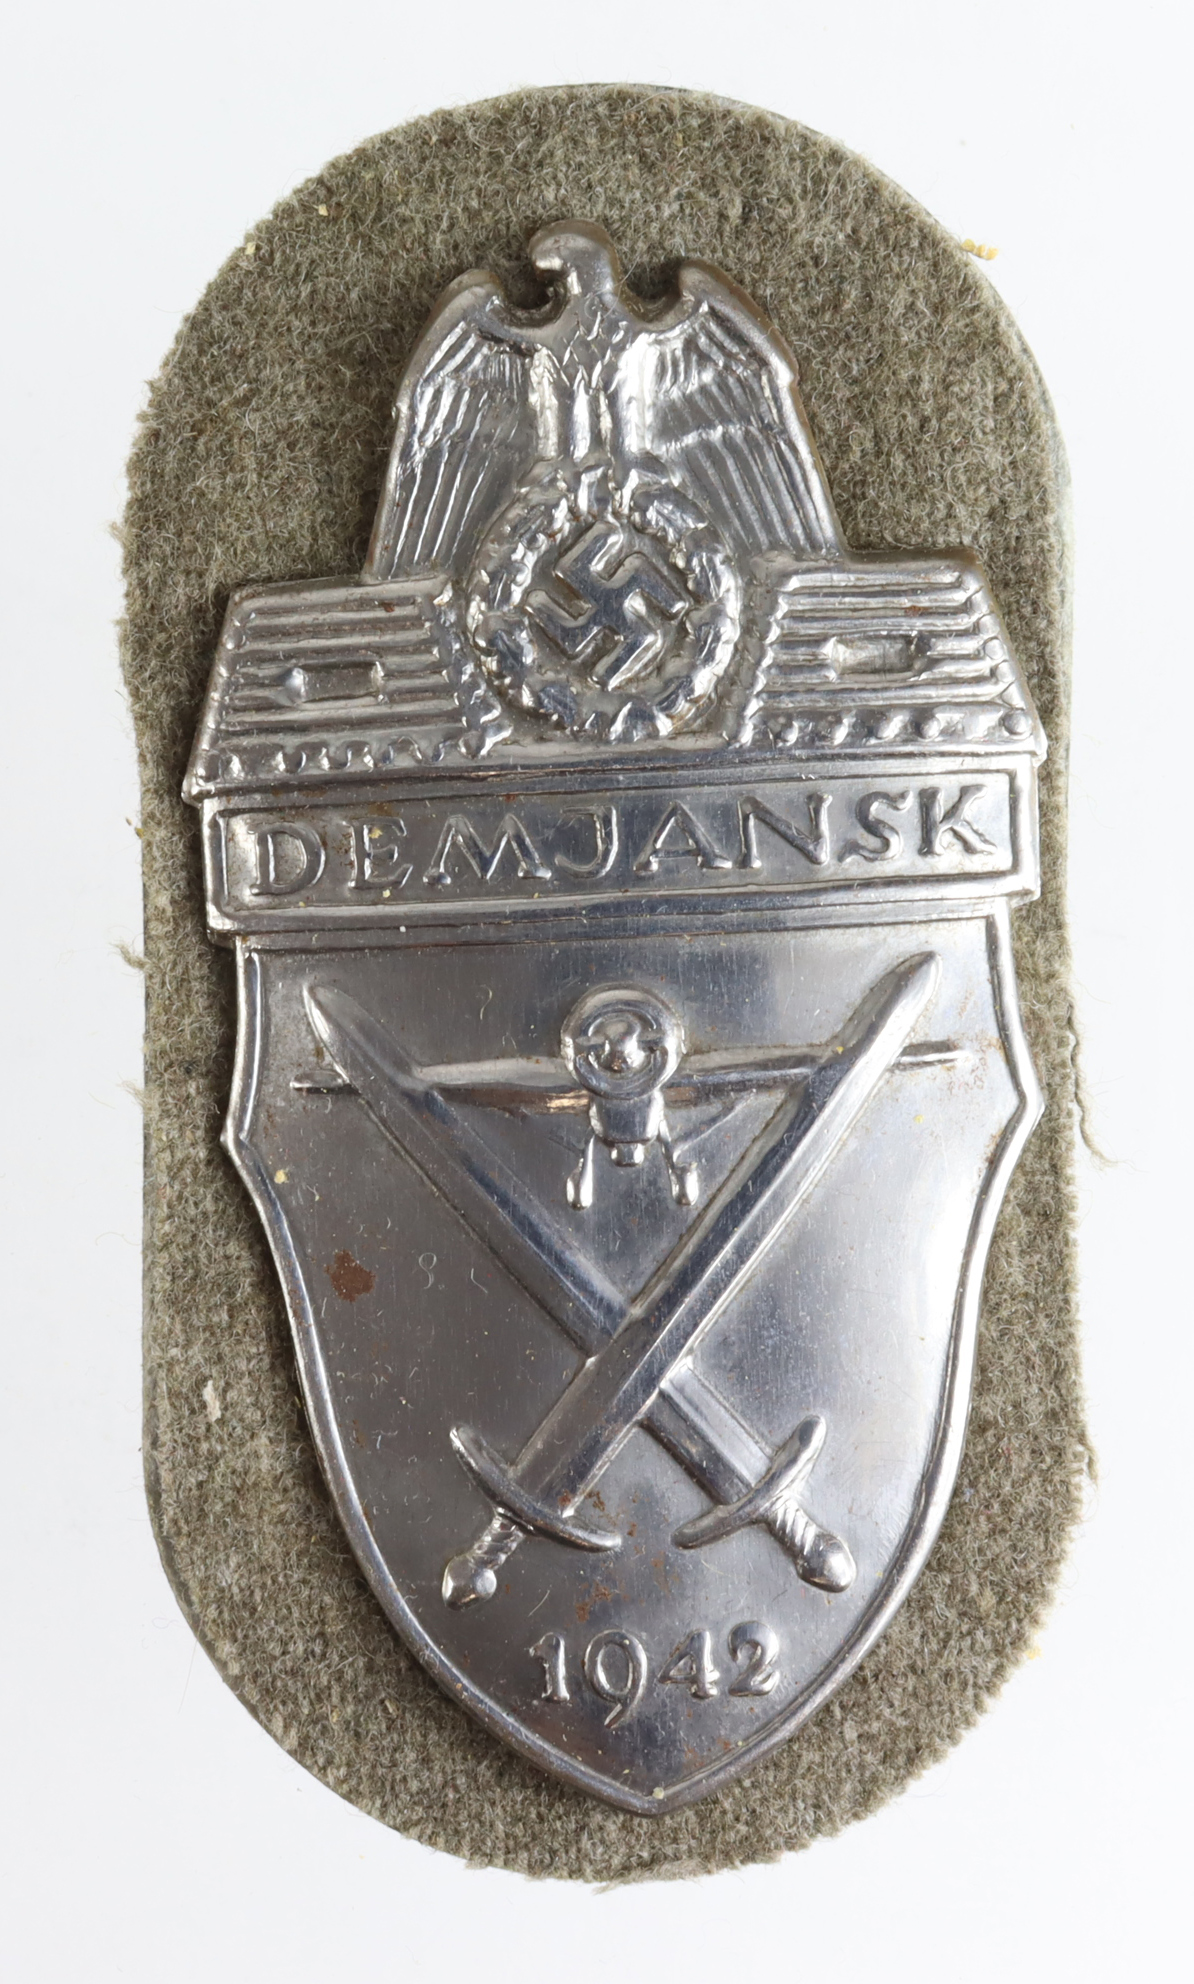 German Nazi Demjansk arm shield, with cloth backing